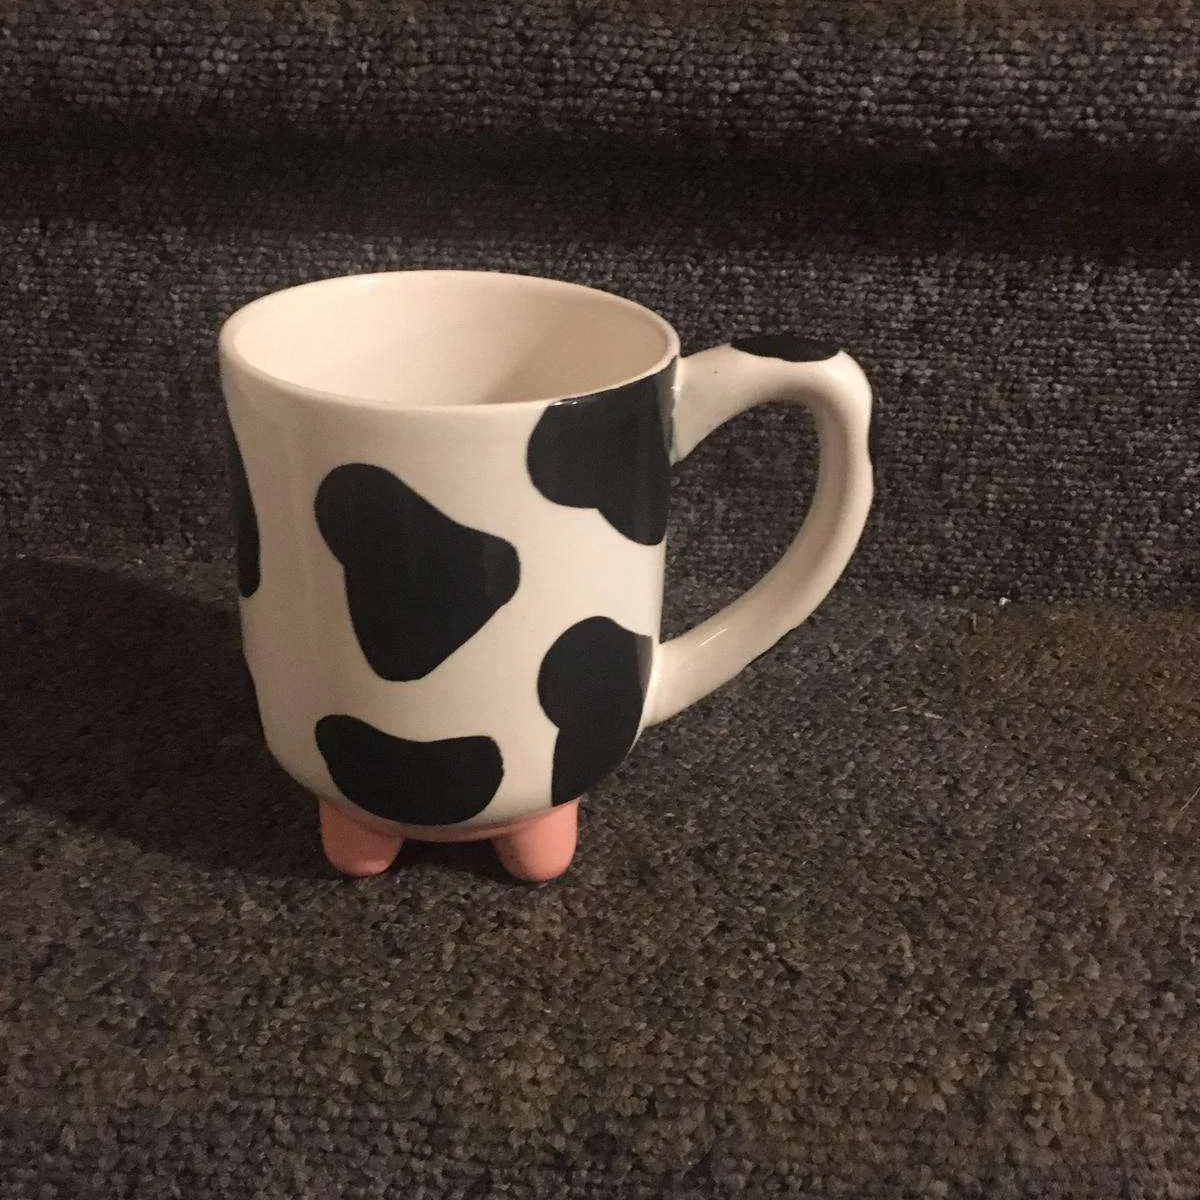 cow mug - never been used photo 1